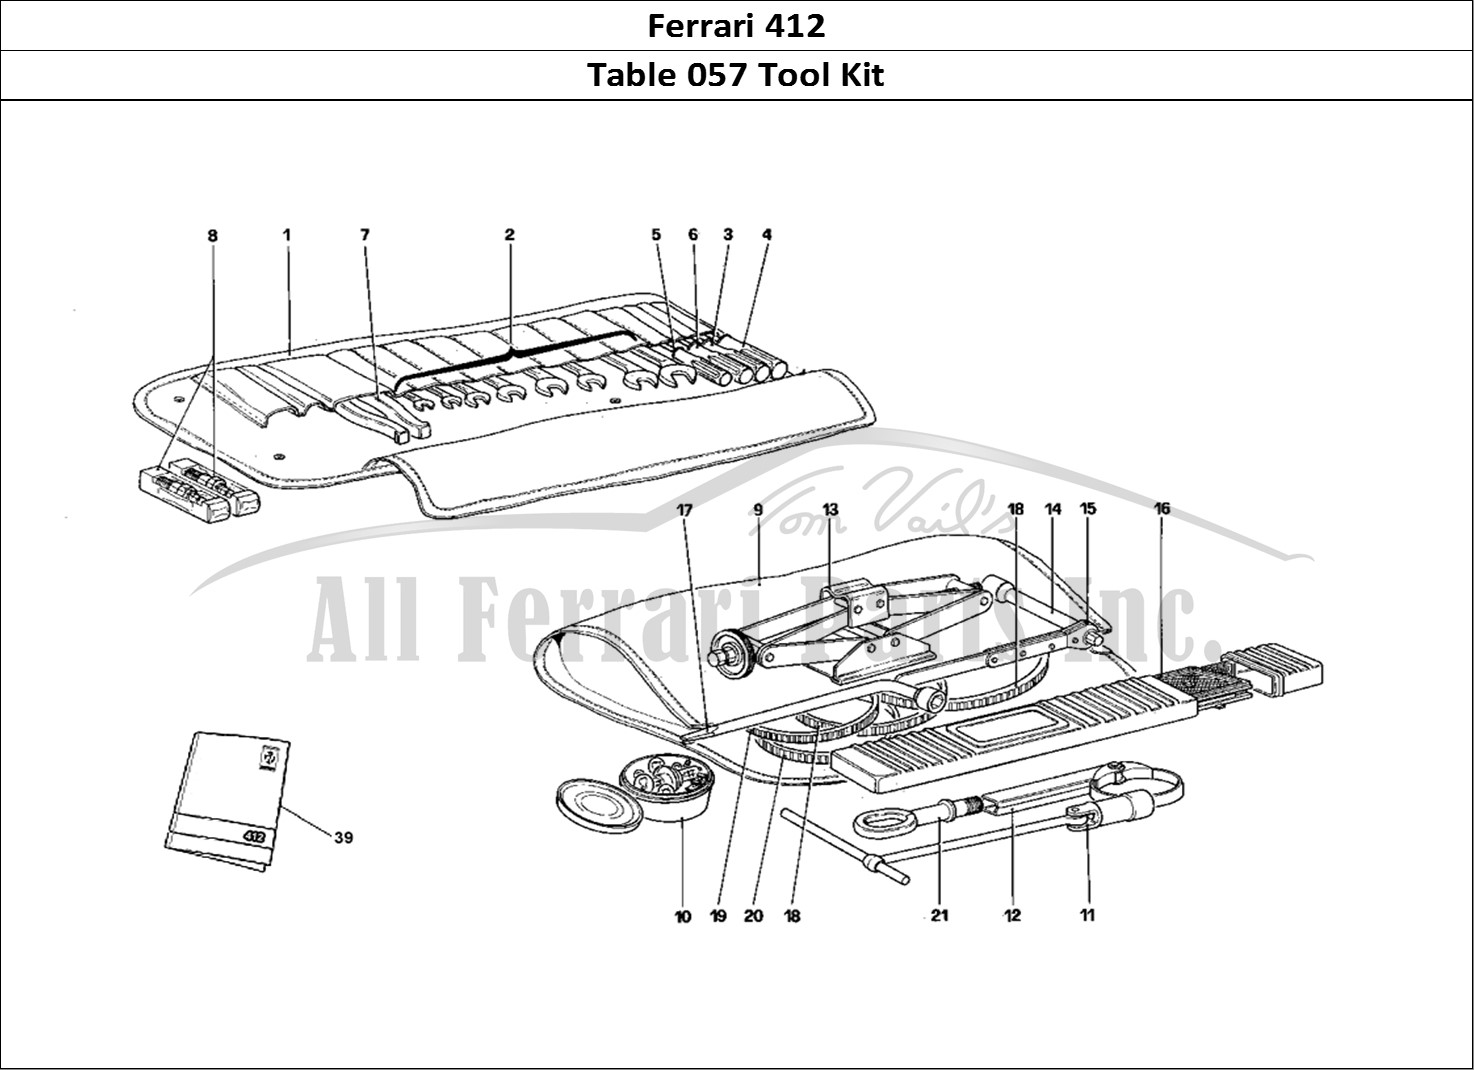 Ferrari Parts Ferrari 412 (Mechanical) Page 057 Tool-Kit